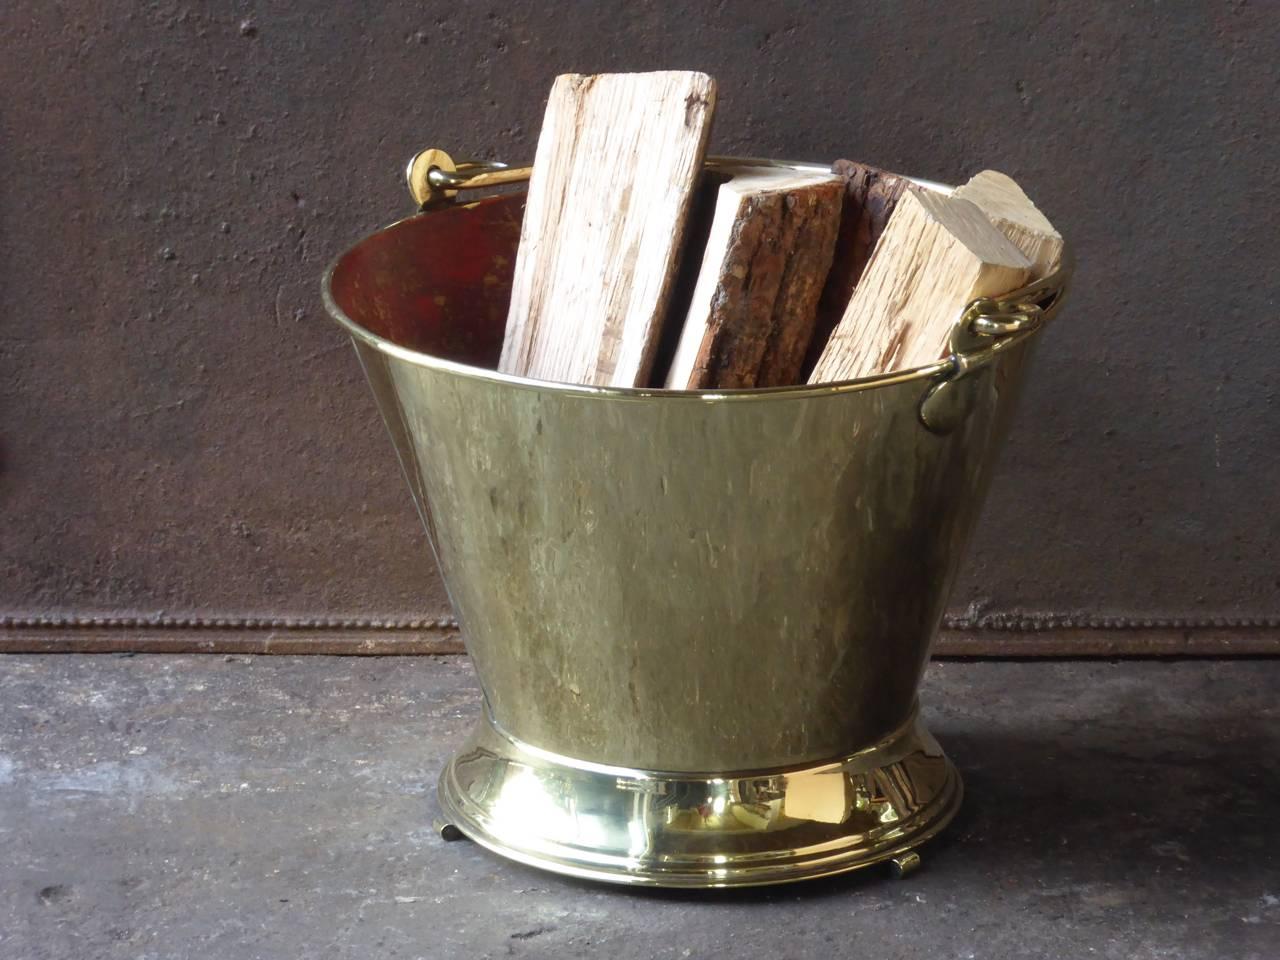 19th century Dutch log bin - firewood holder made of polished brass.